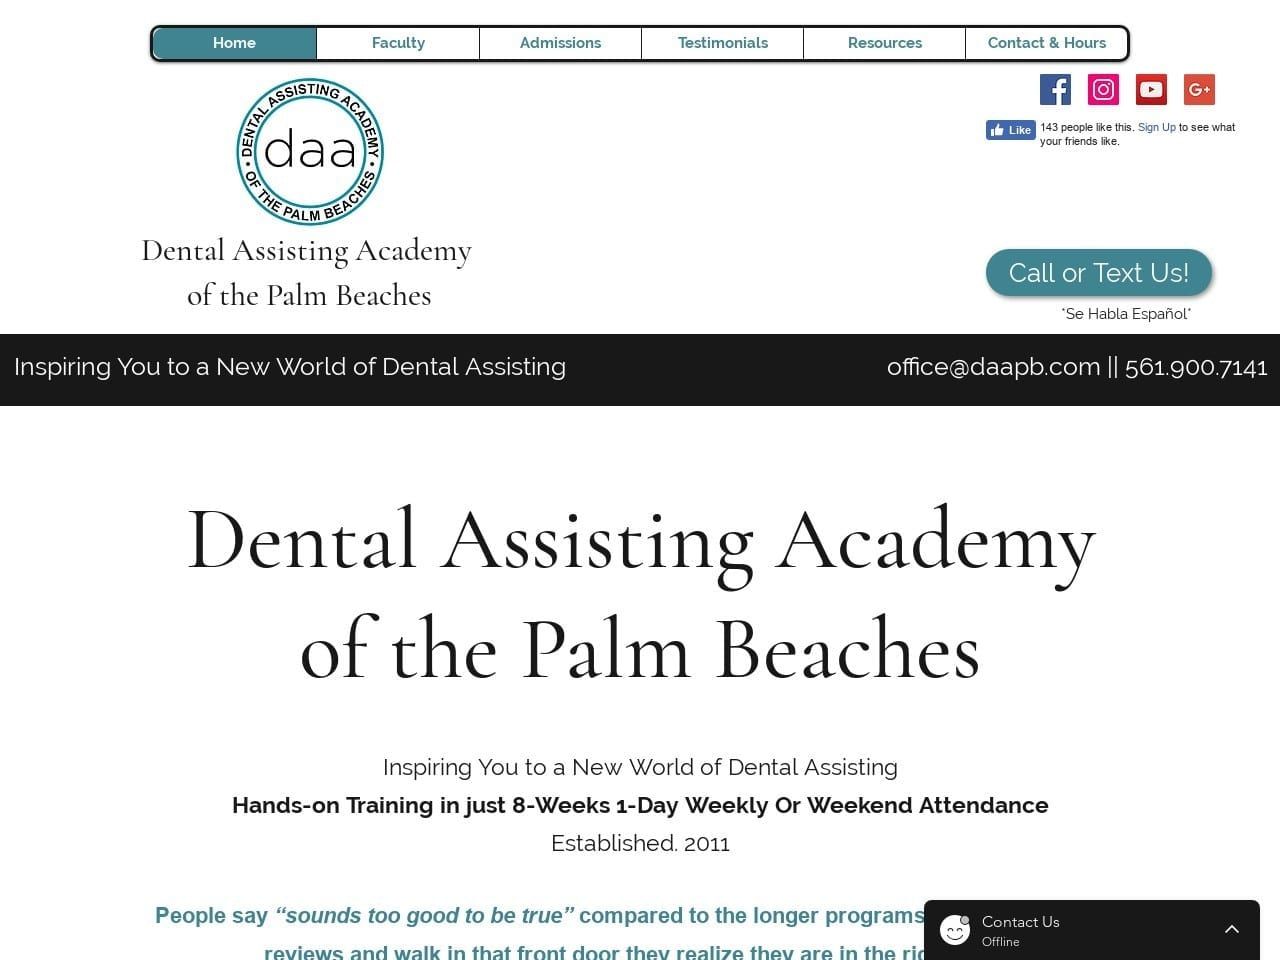 Dental Assisting Academy of the Palm Beaches Website Screenshot from daapb.com